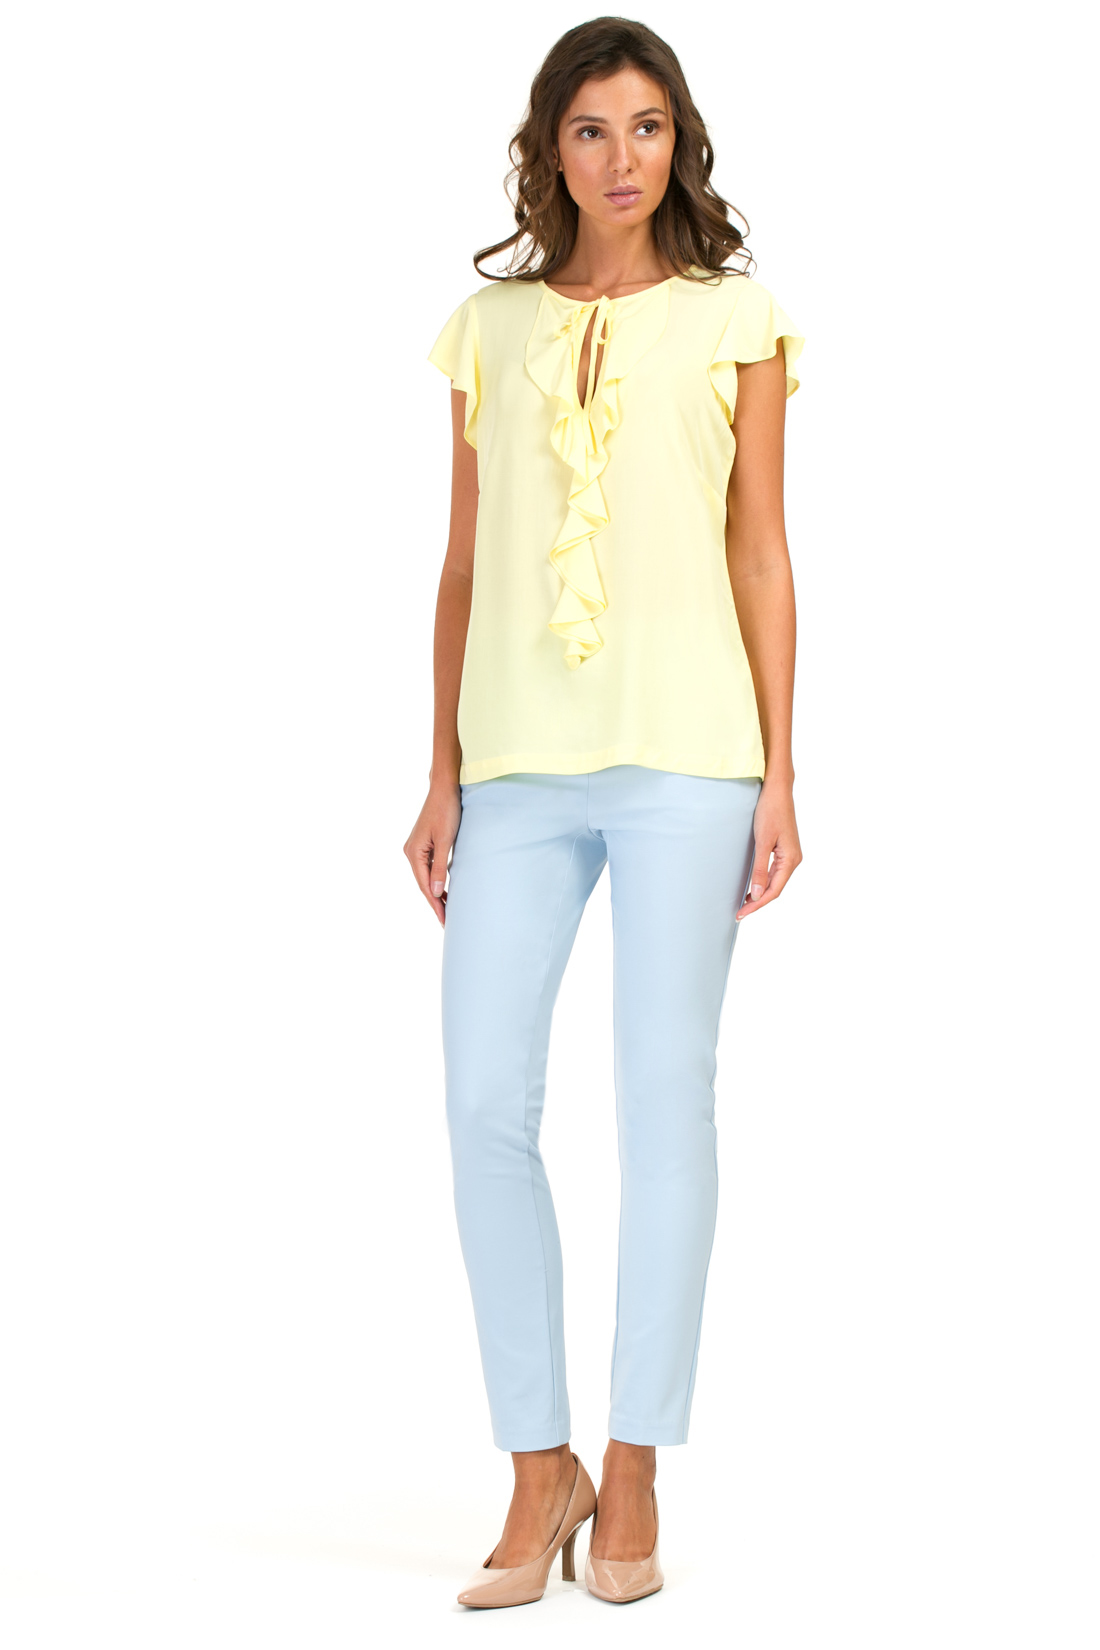 Блузка с рюшами (арт. baon B197013), размер XXL, цвет желтый Блузка с рюшами (арт. baon B197013) - фото 5